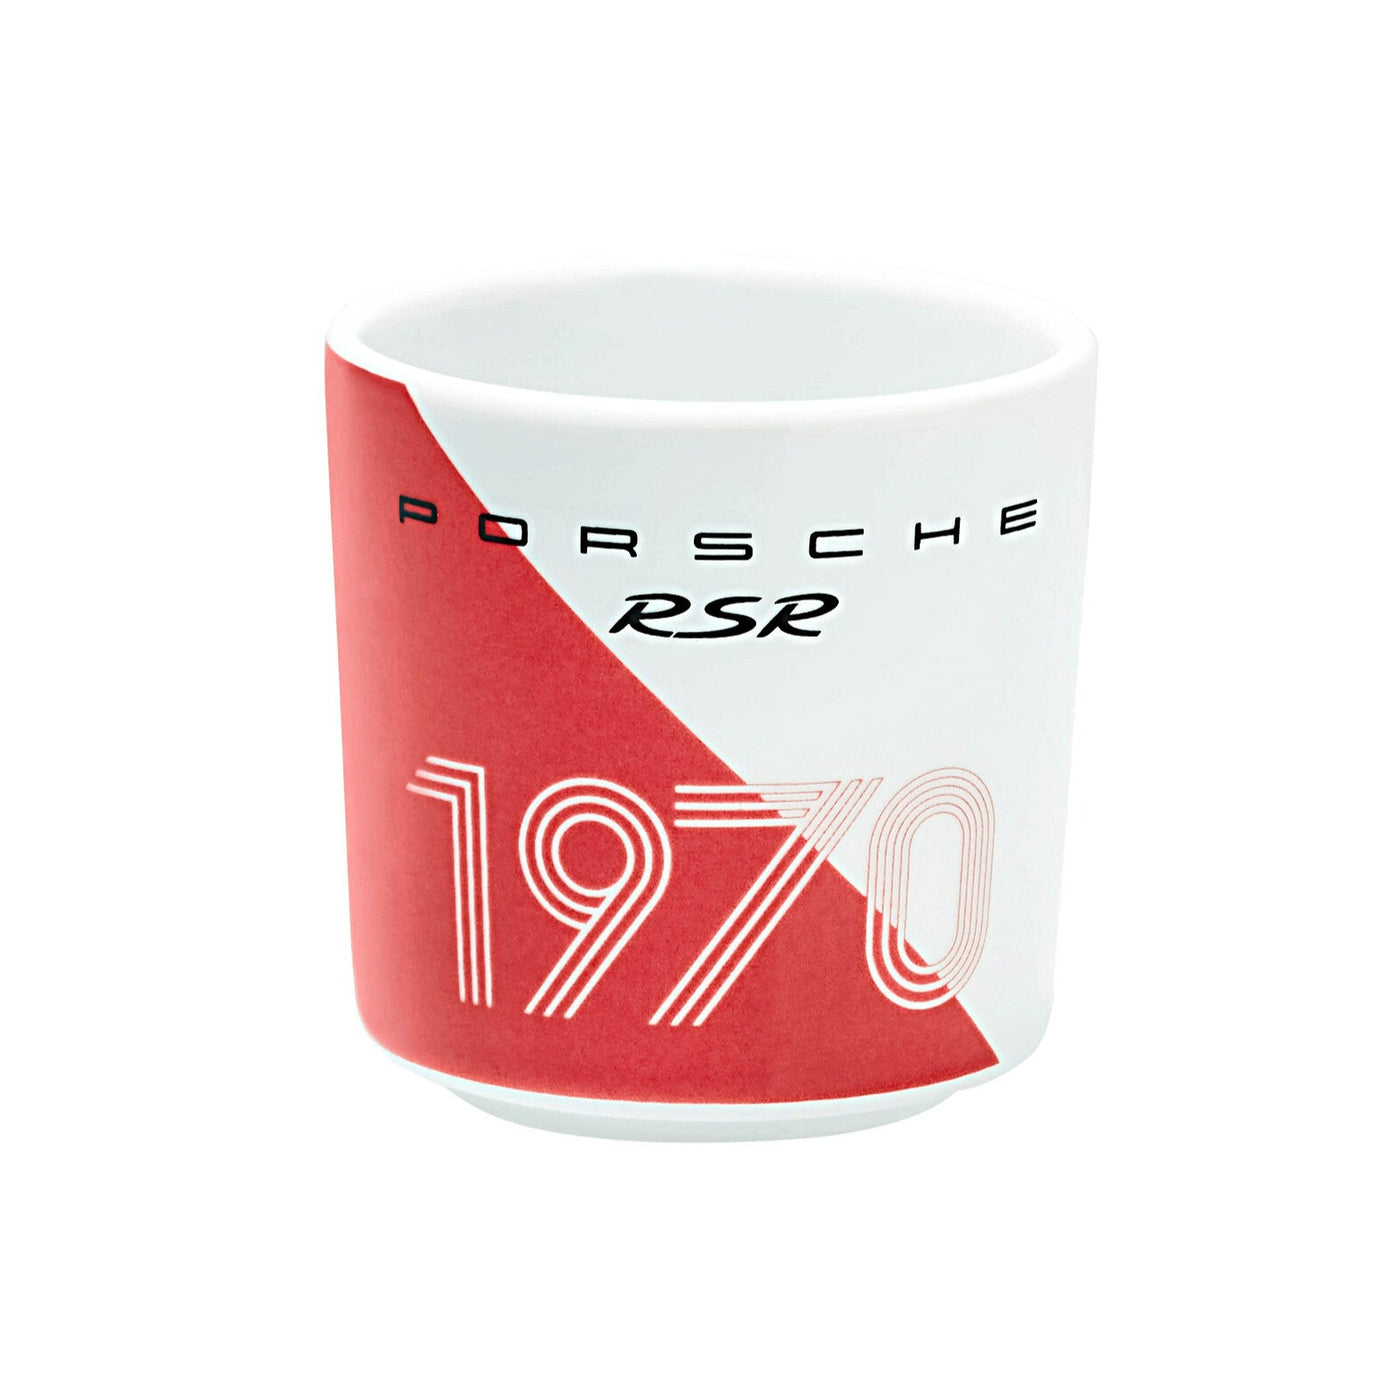 Porsche Espresso Cup - RSR